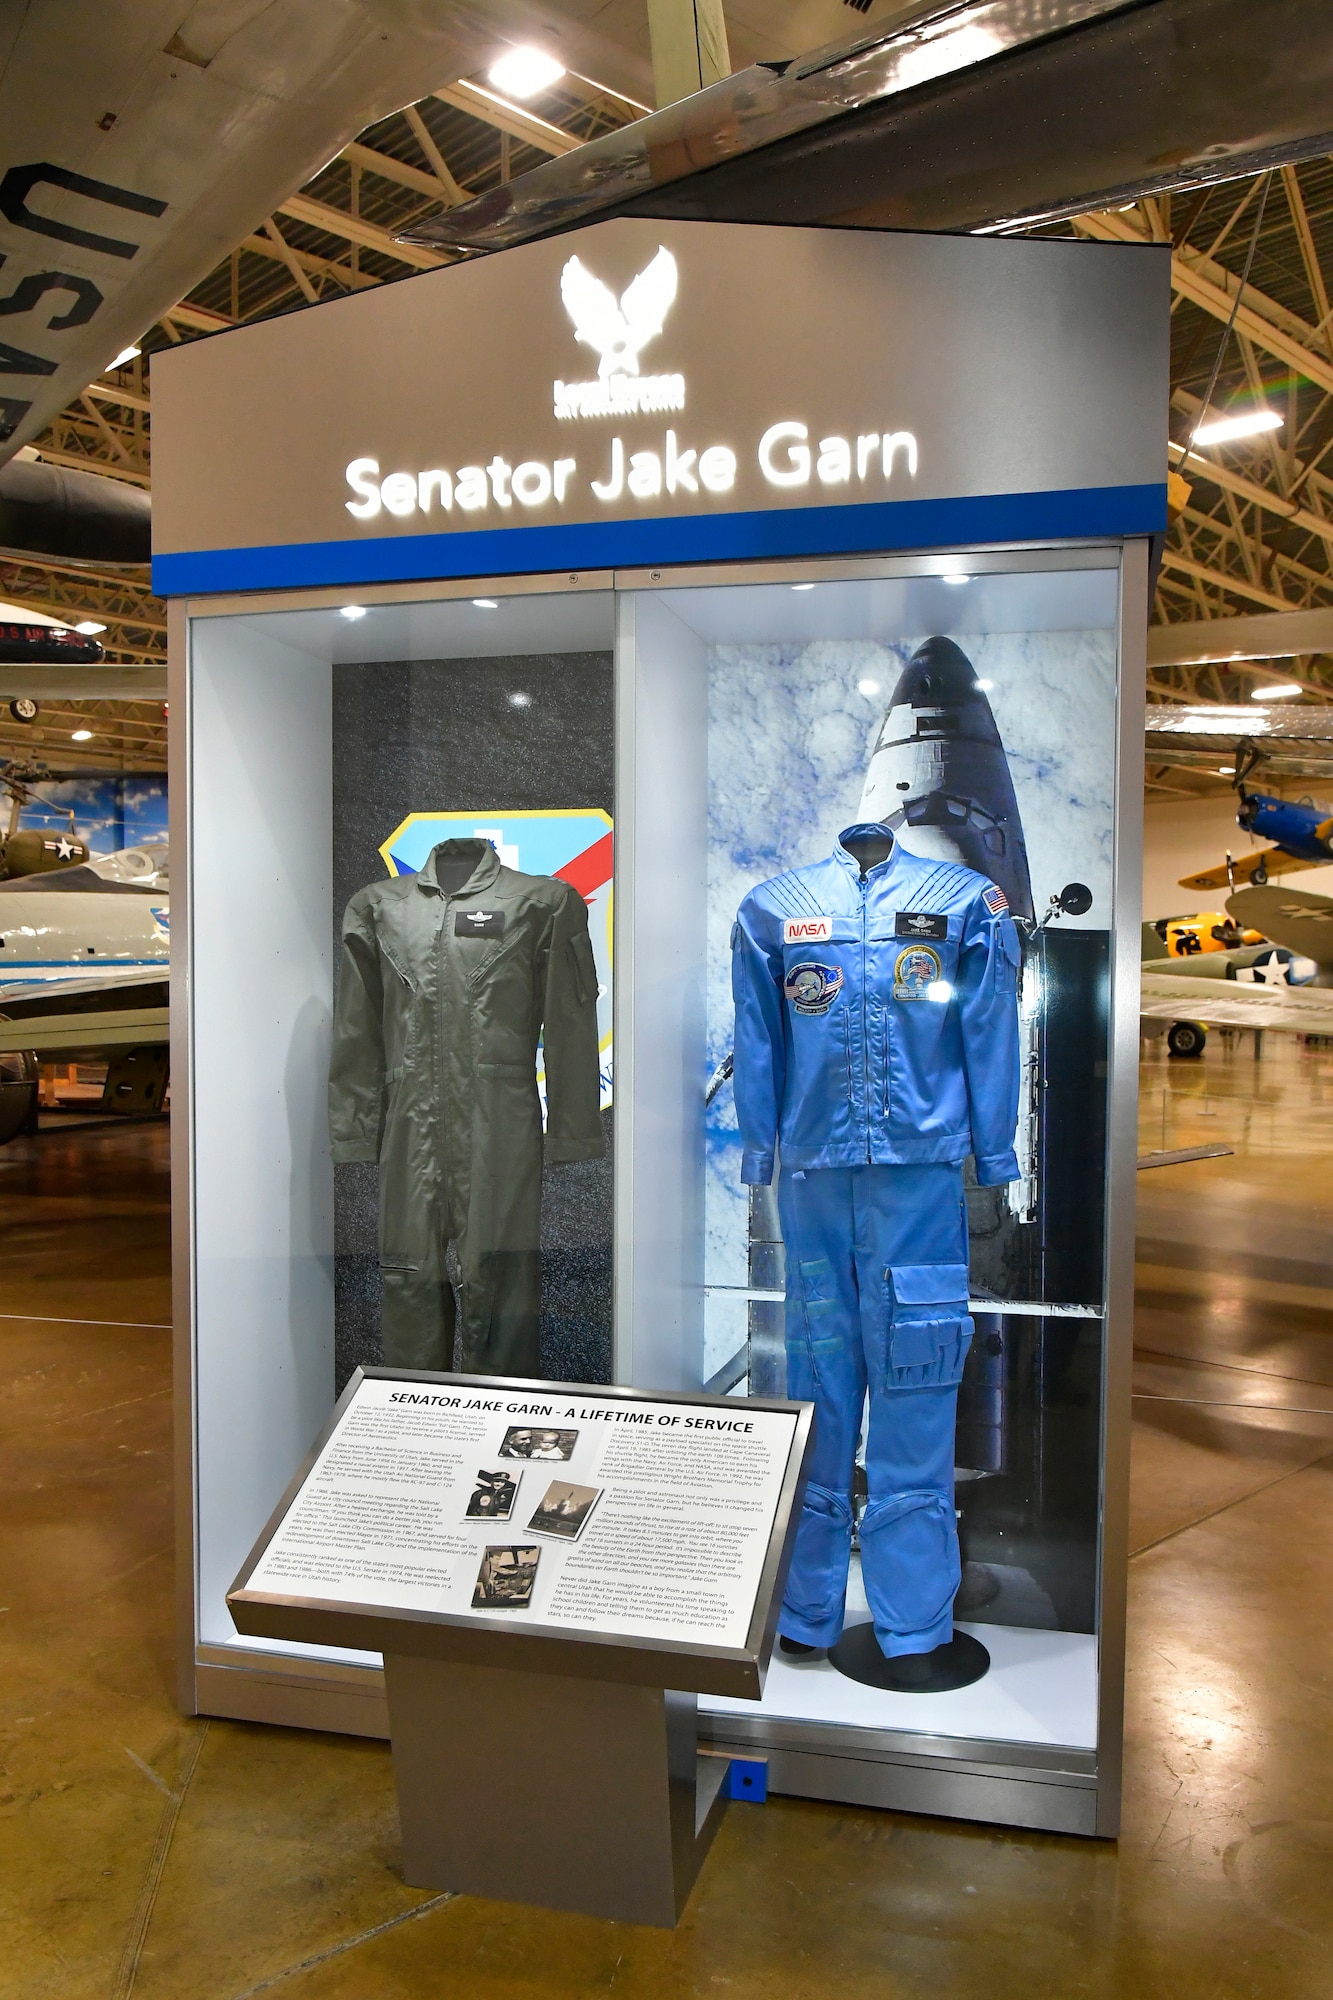 The exhibit of former Utah Sen. Jake Garn featuring his astronaut and flight suit.